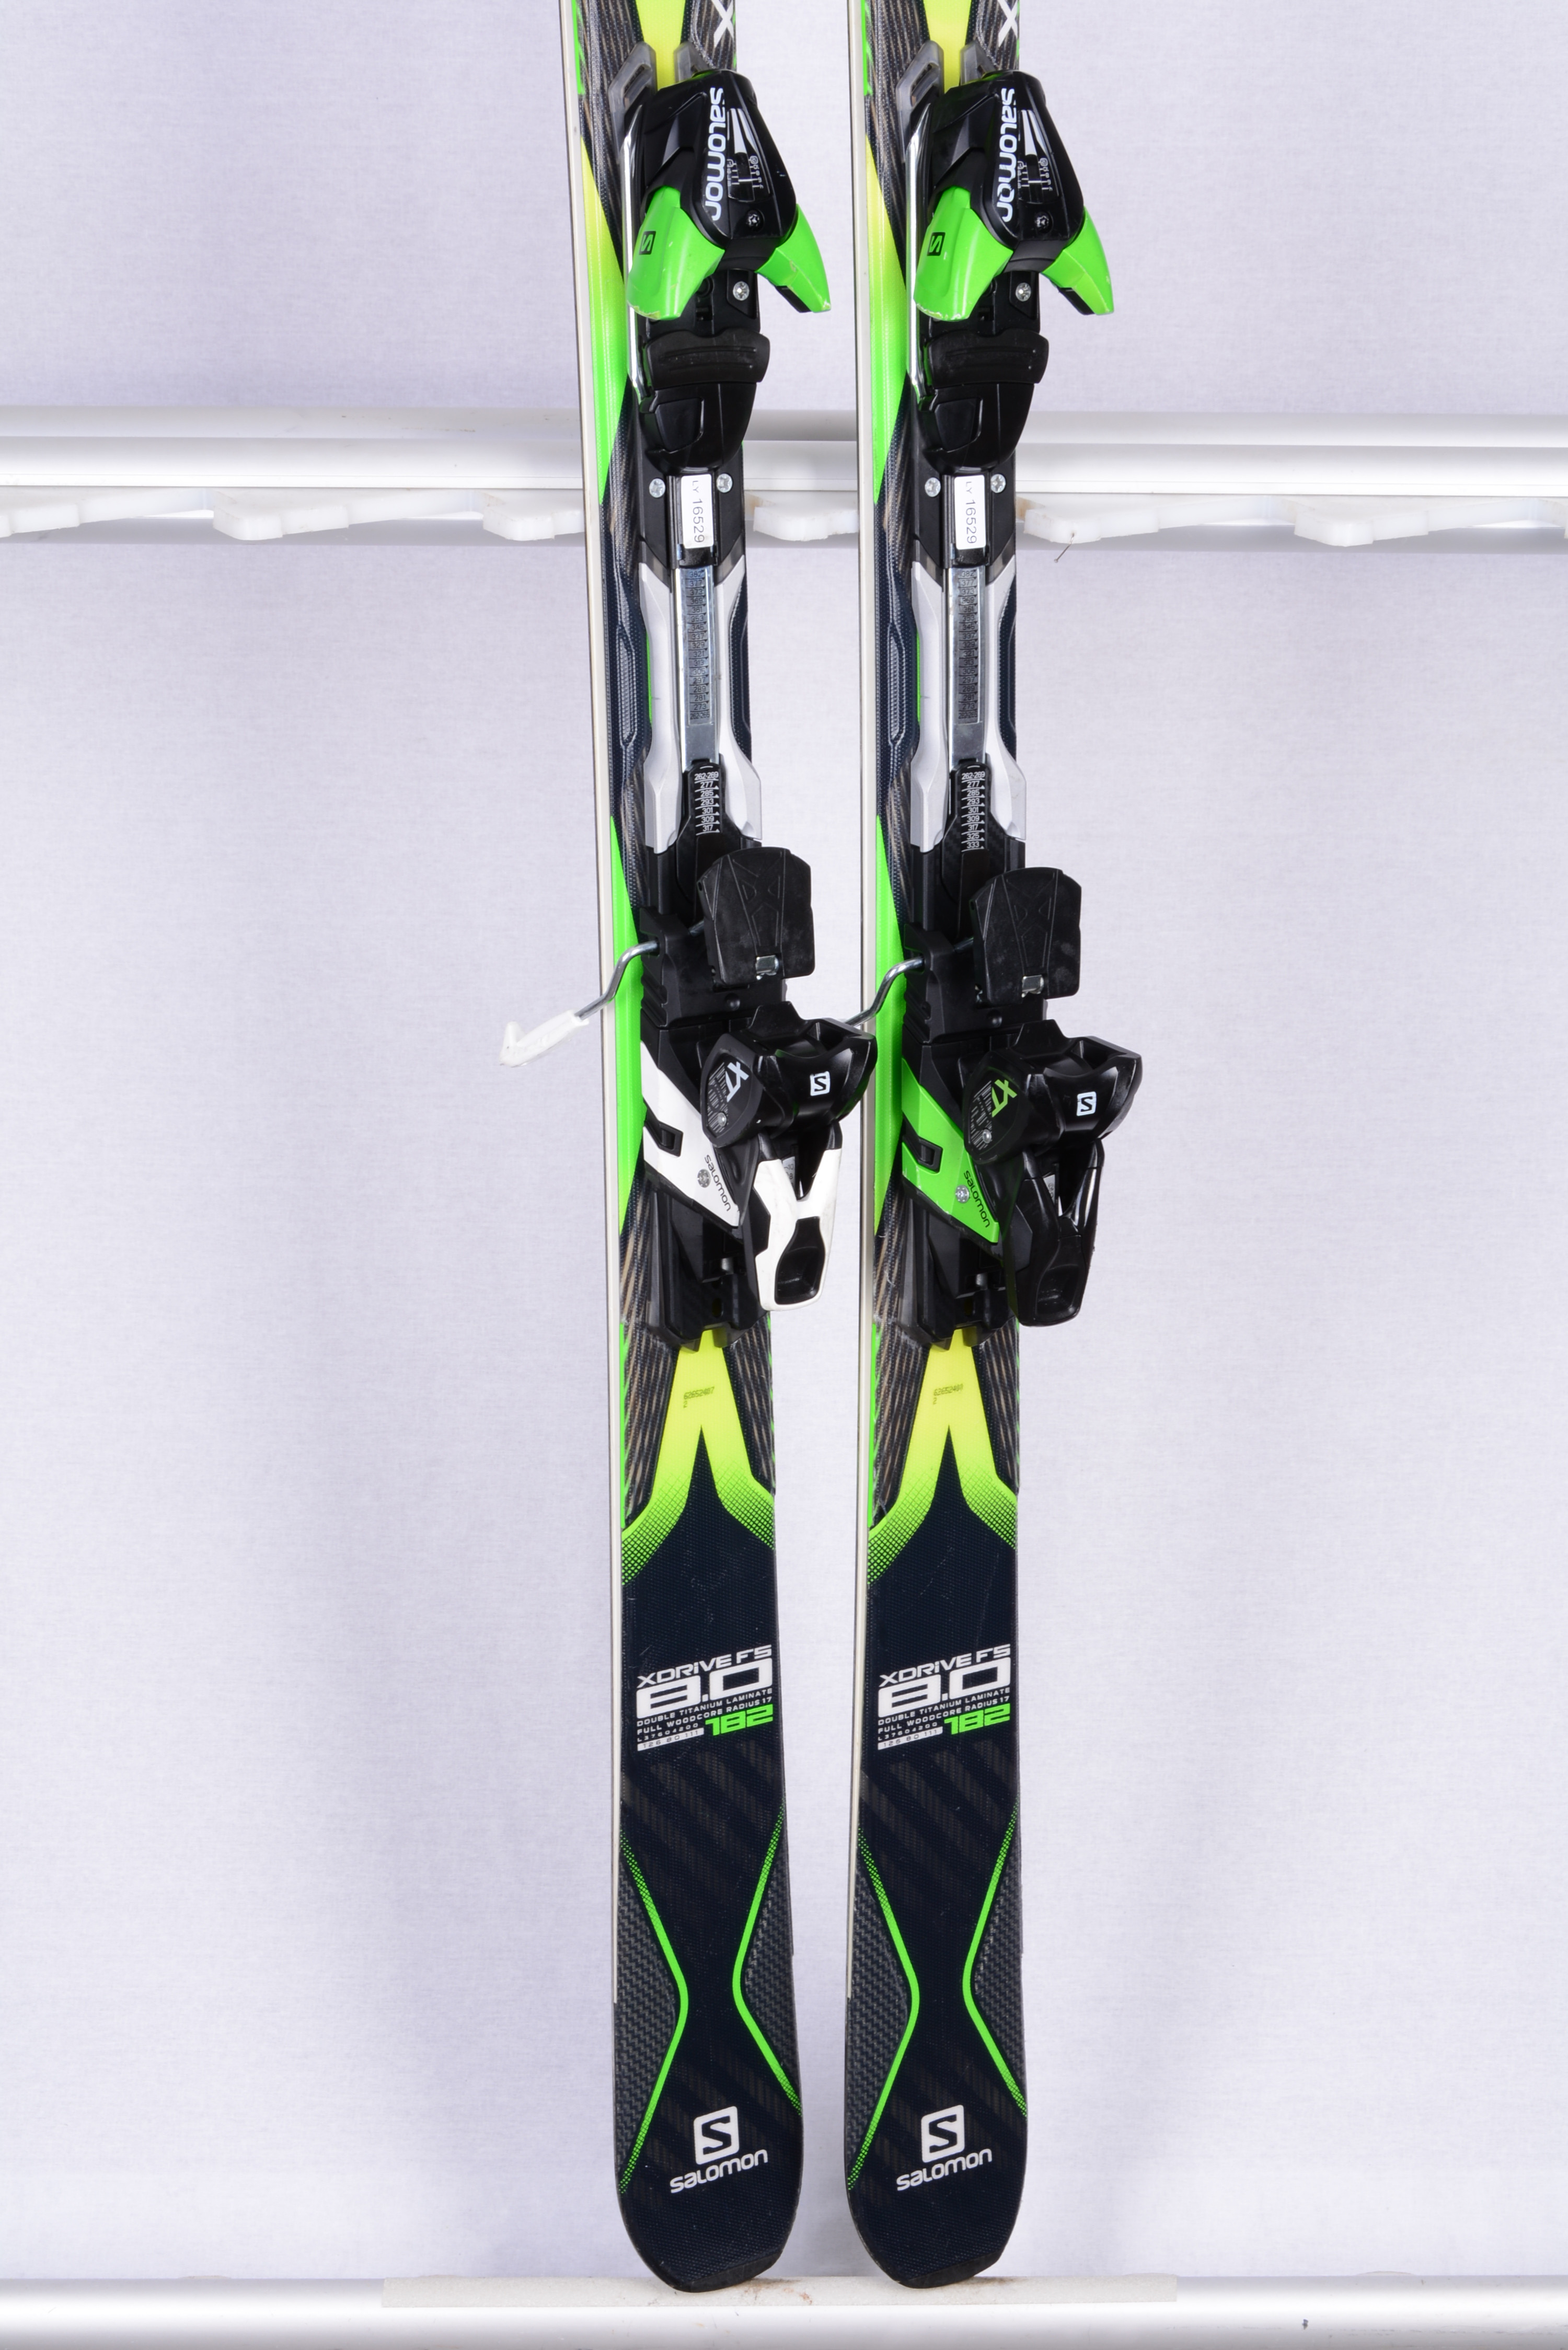 Hoorzitting Blootstellen glans skis SALOMON X DRIVE FS 8.0, black/green, double ti laminate, full woodcore  + Salomon XT 12 - Mardosport.com